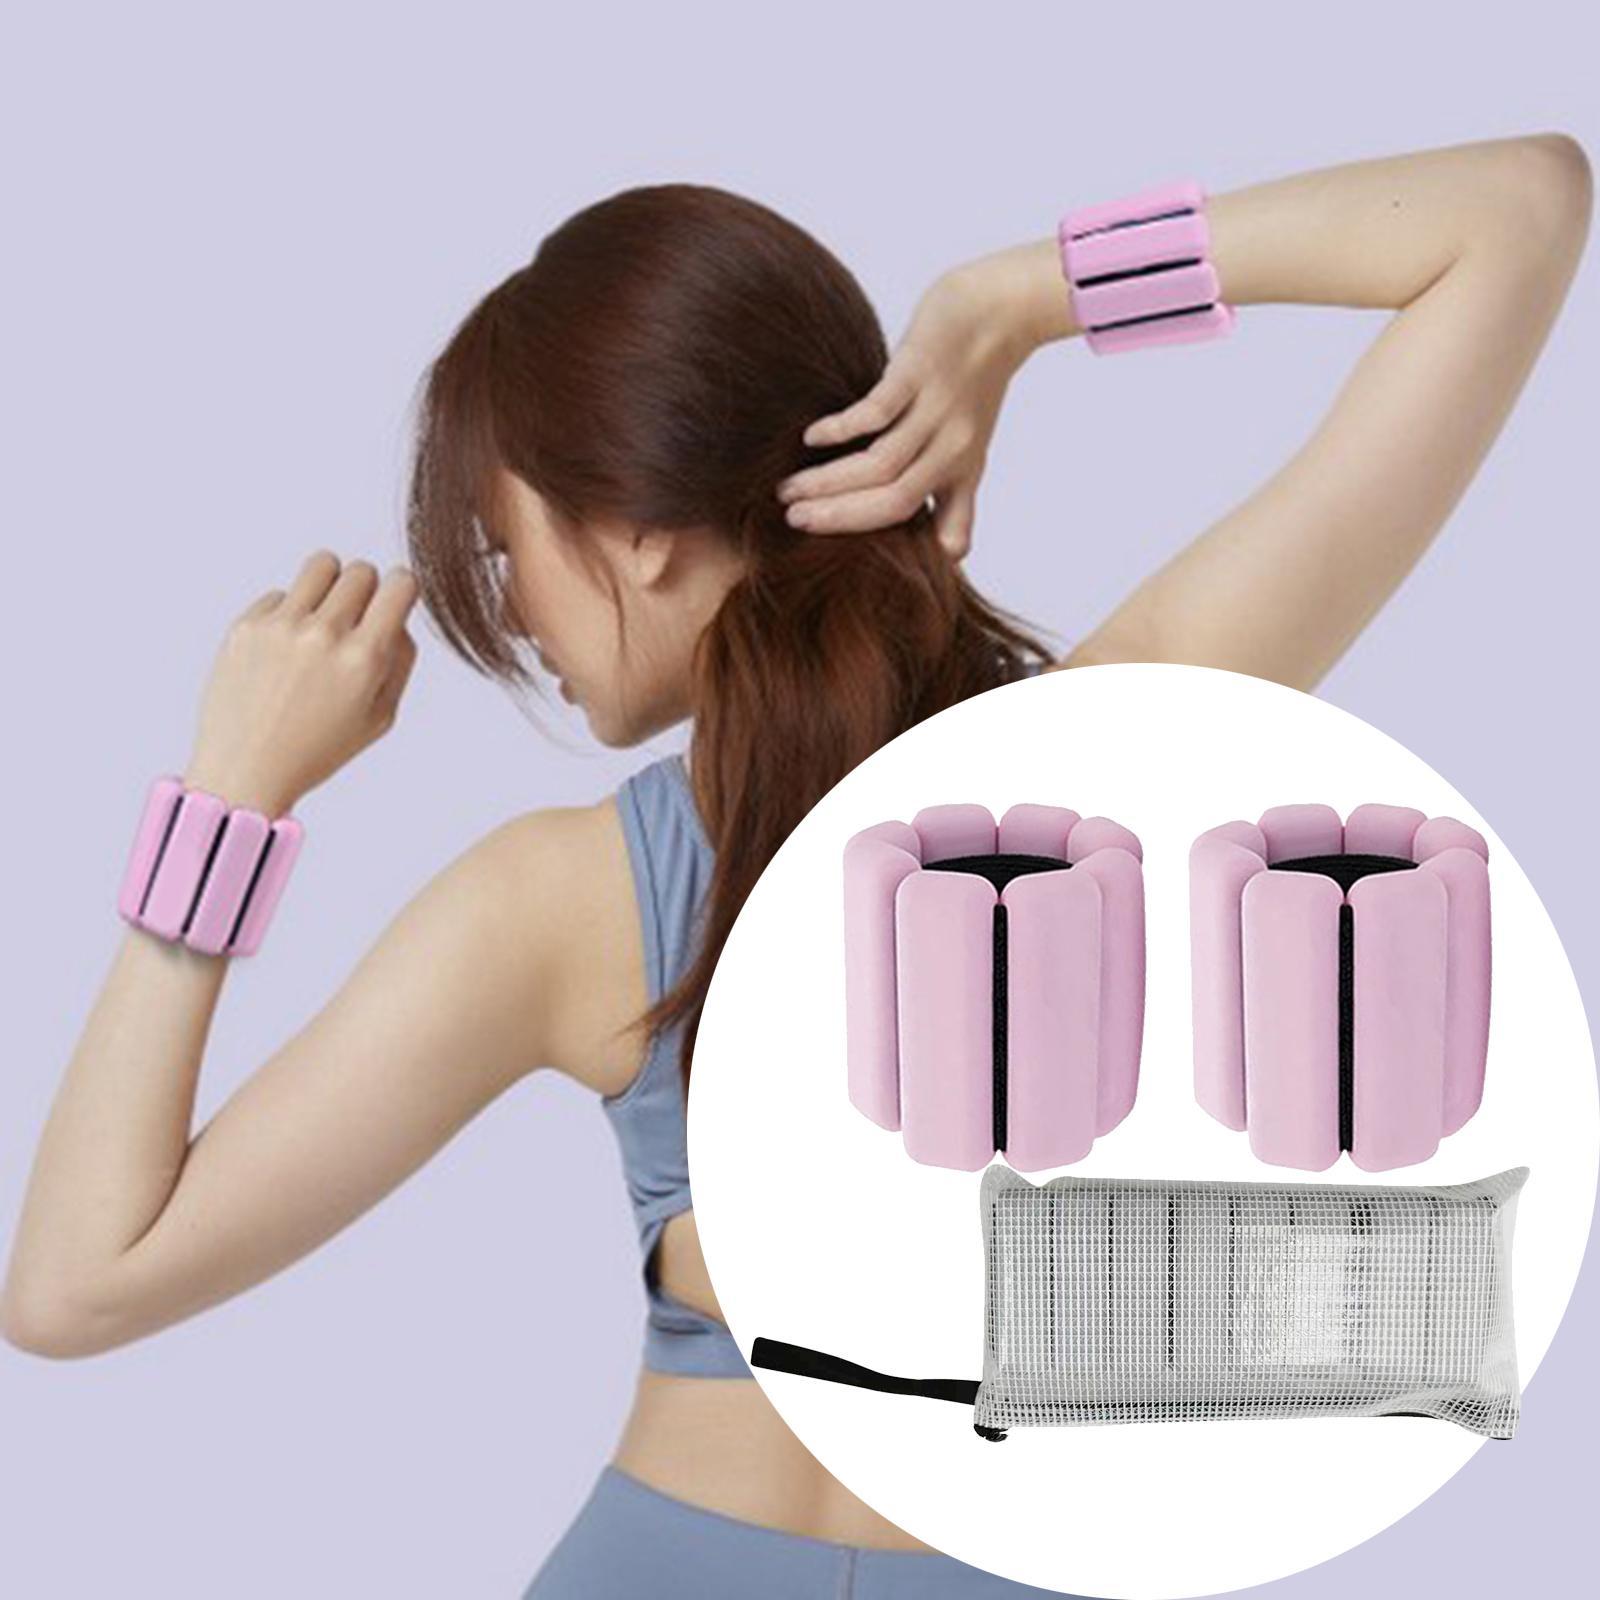 Wrist Weights Bracelet Gym Exercise Yoga Fitness Training Running Pink 2pcs